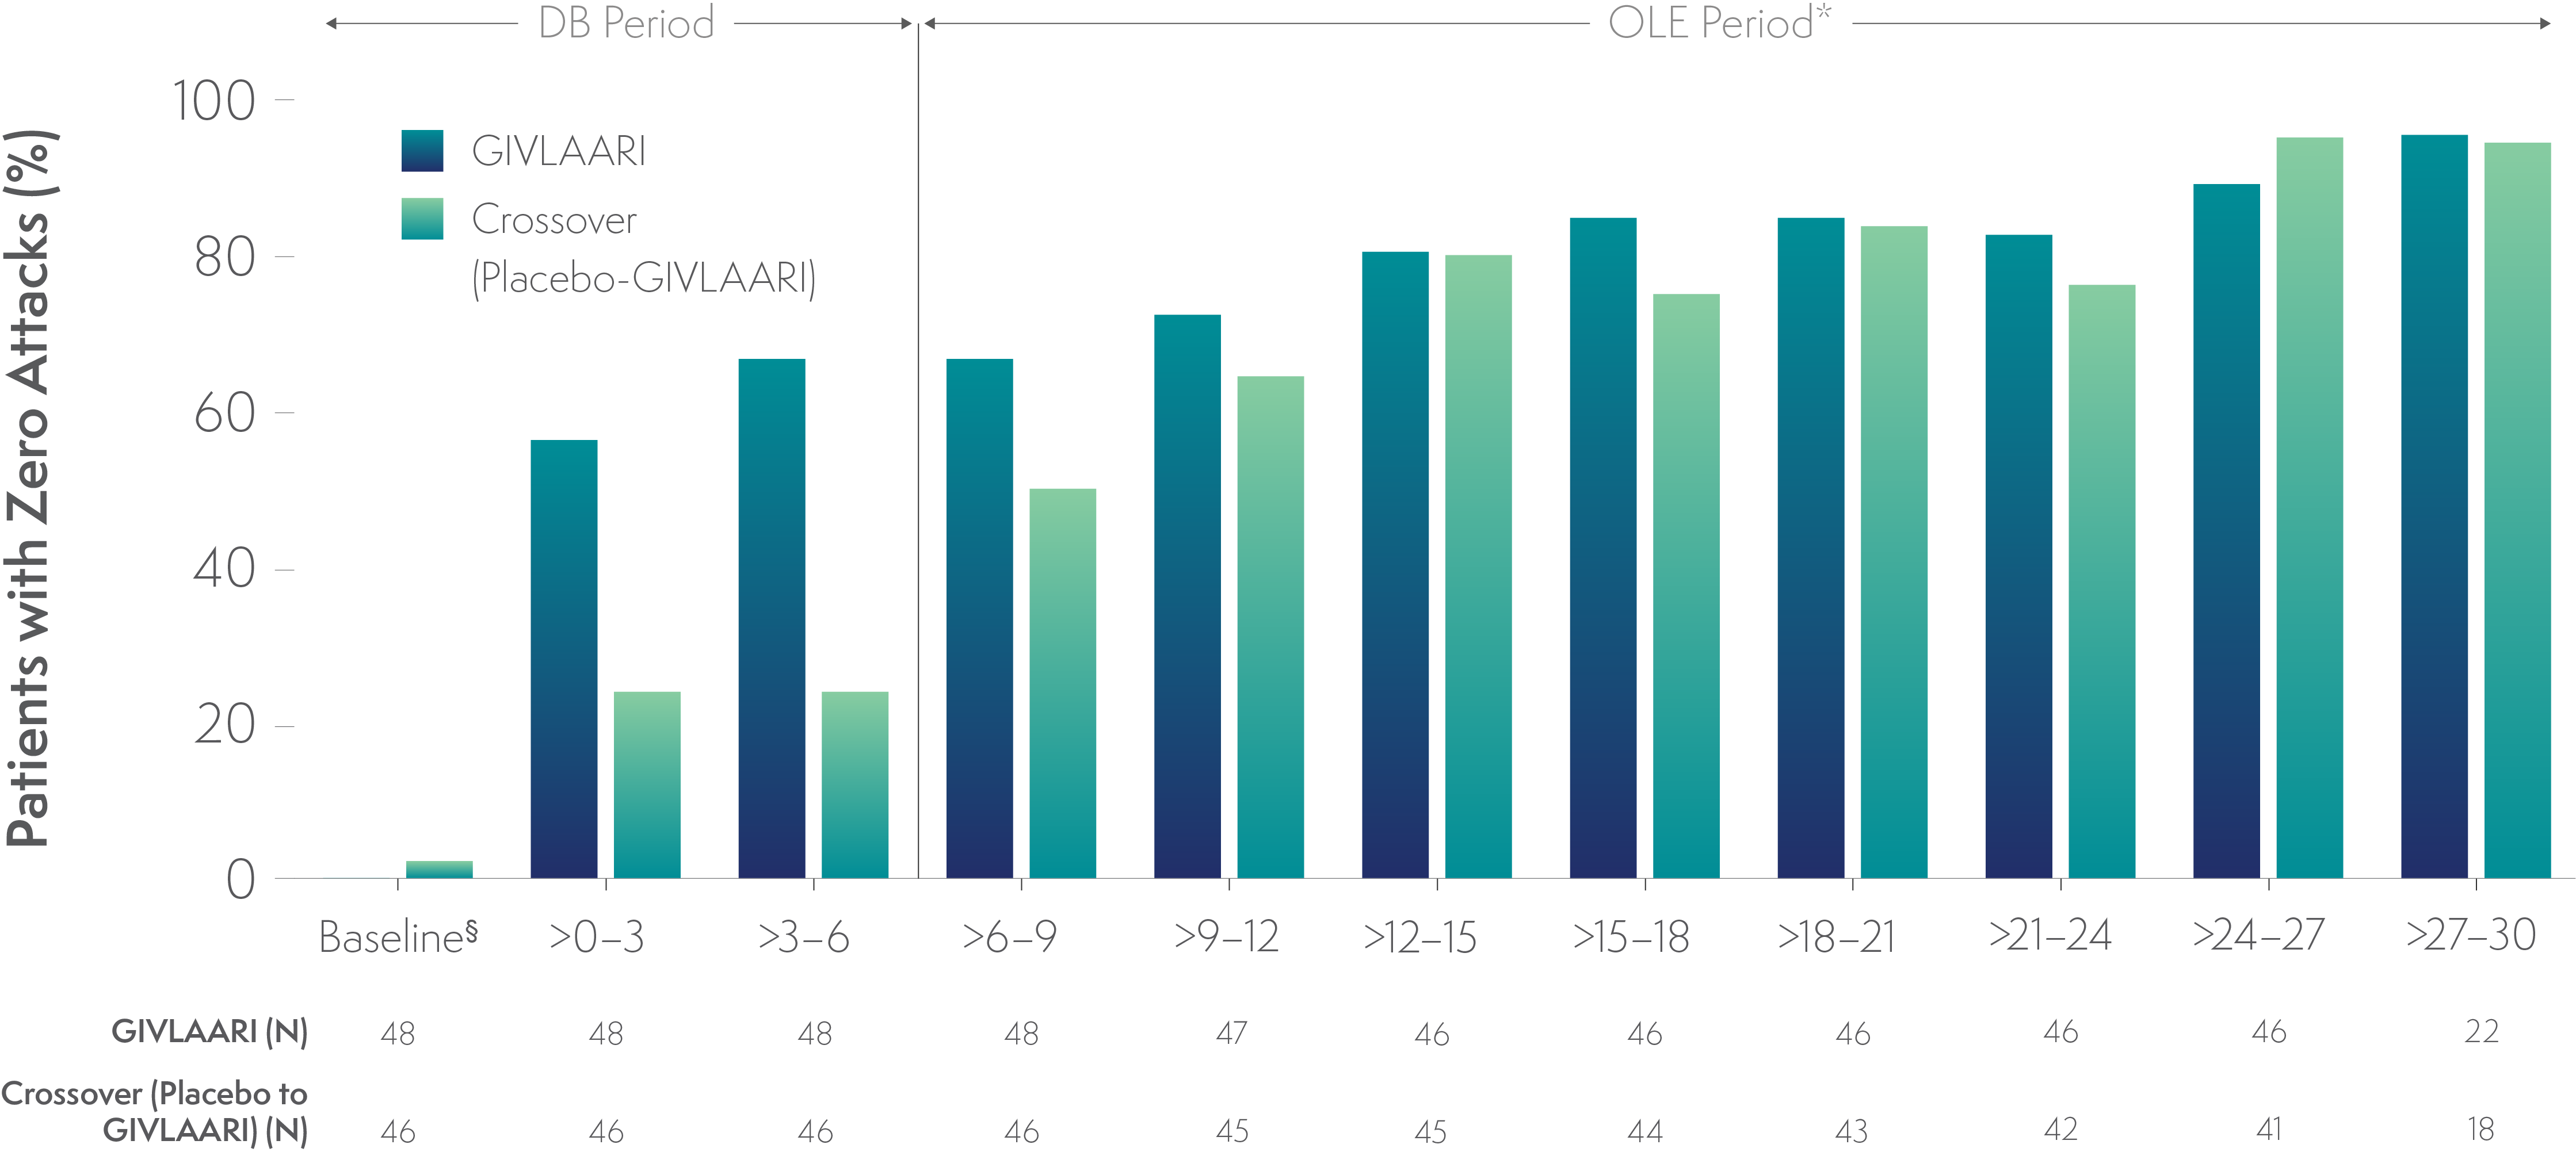 Zero attack rate chart through the OLE period